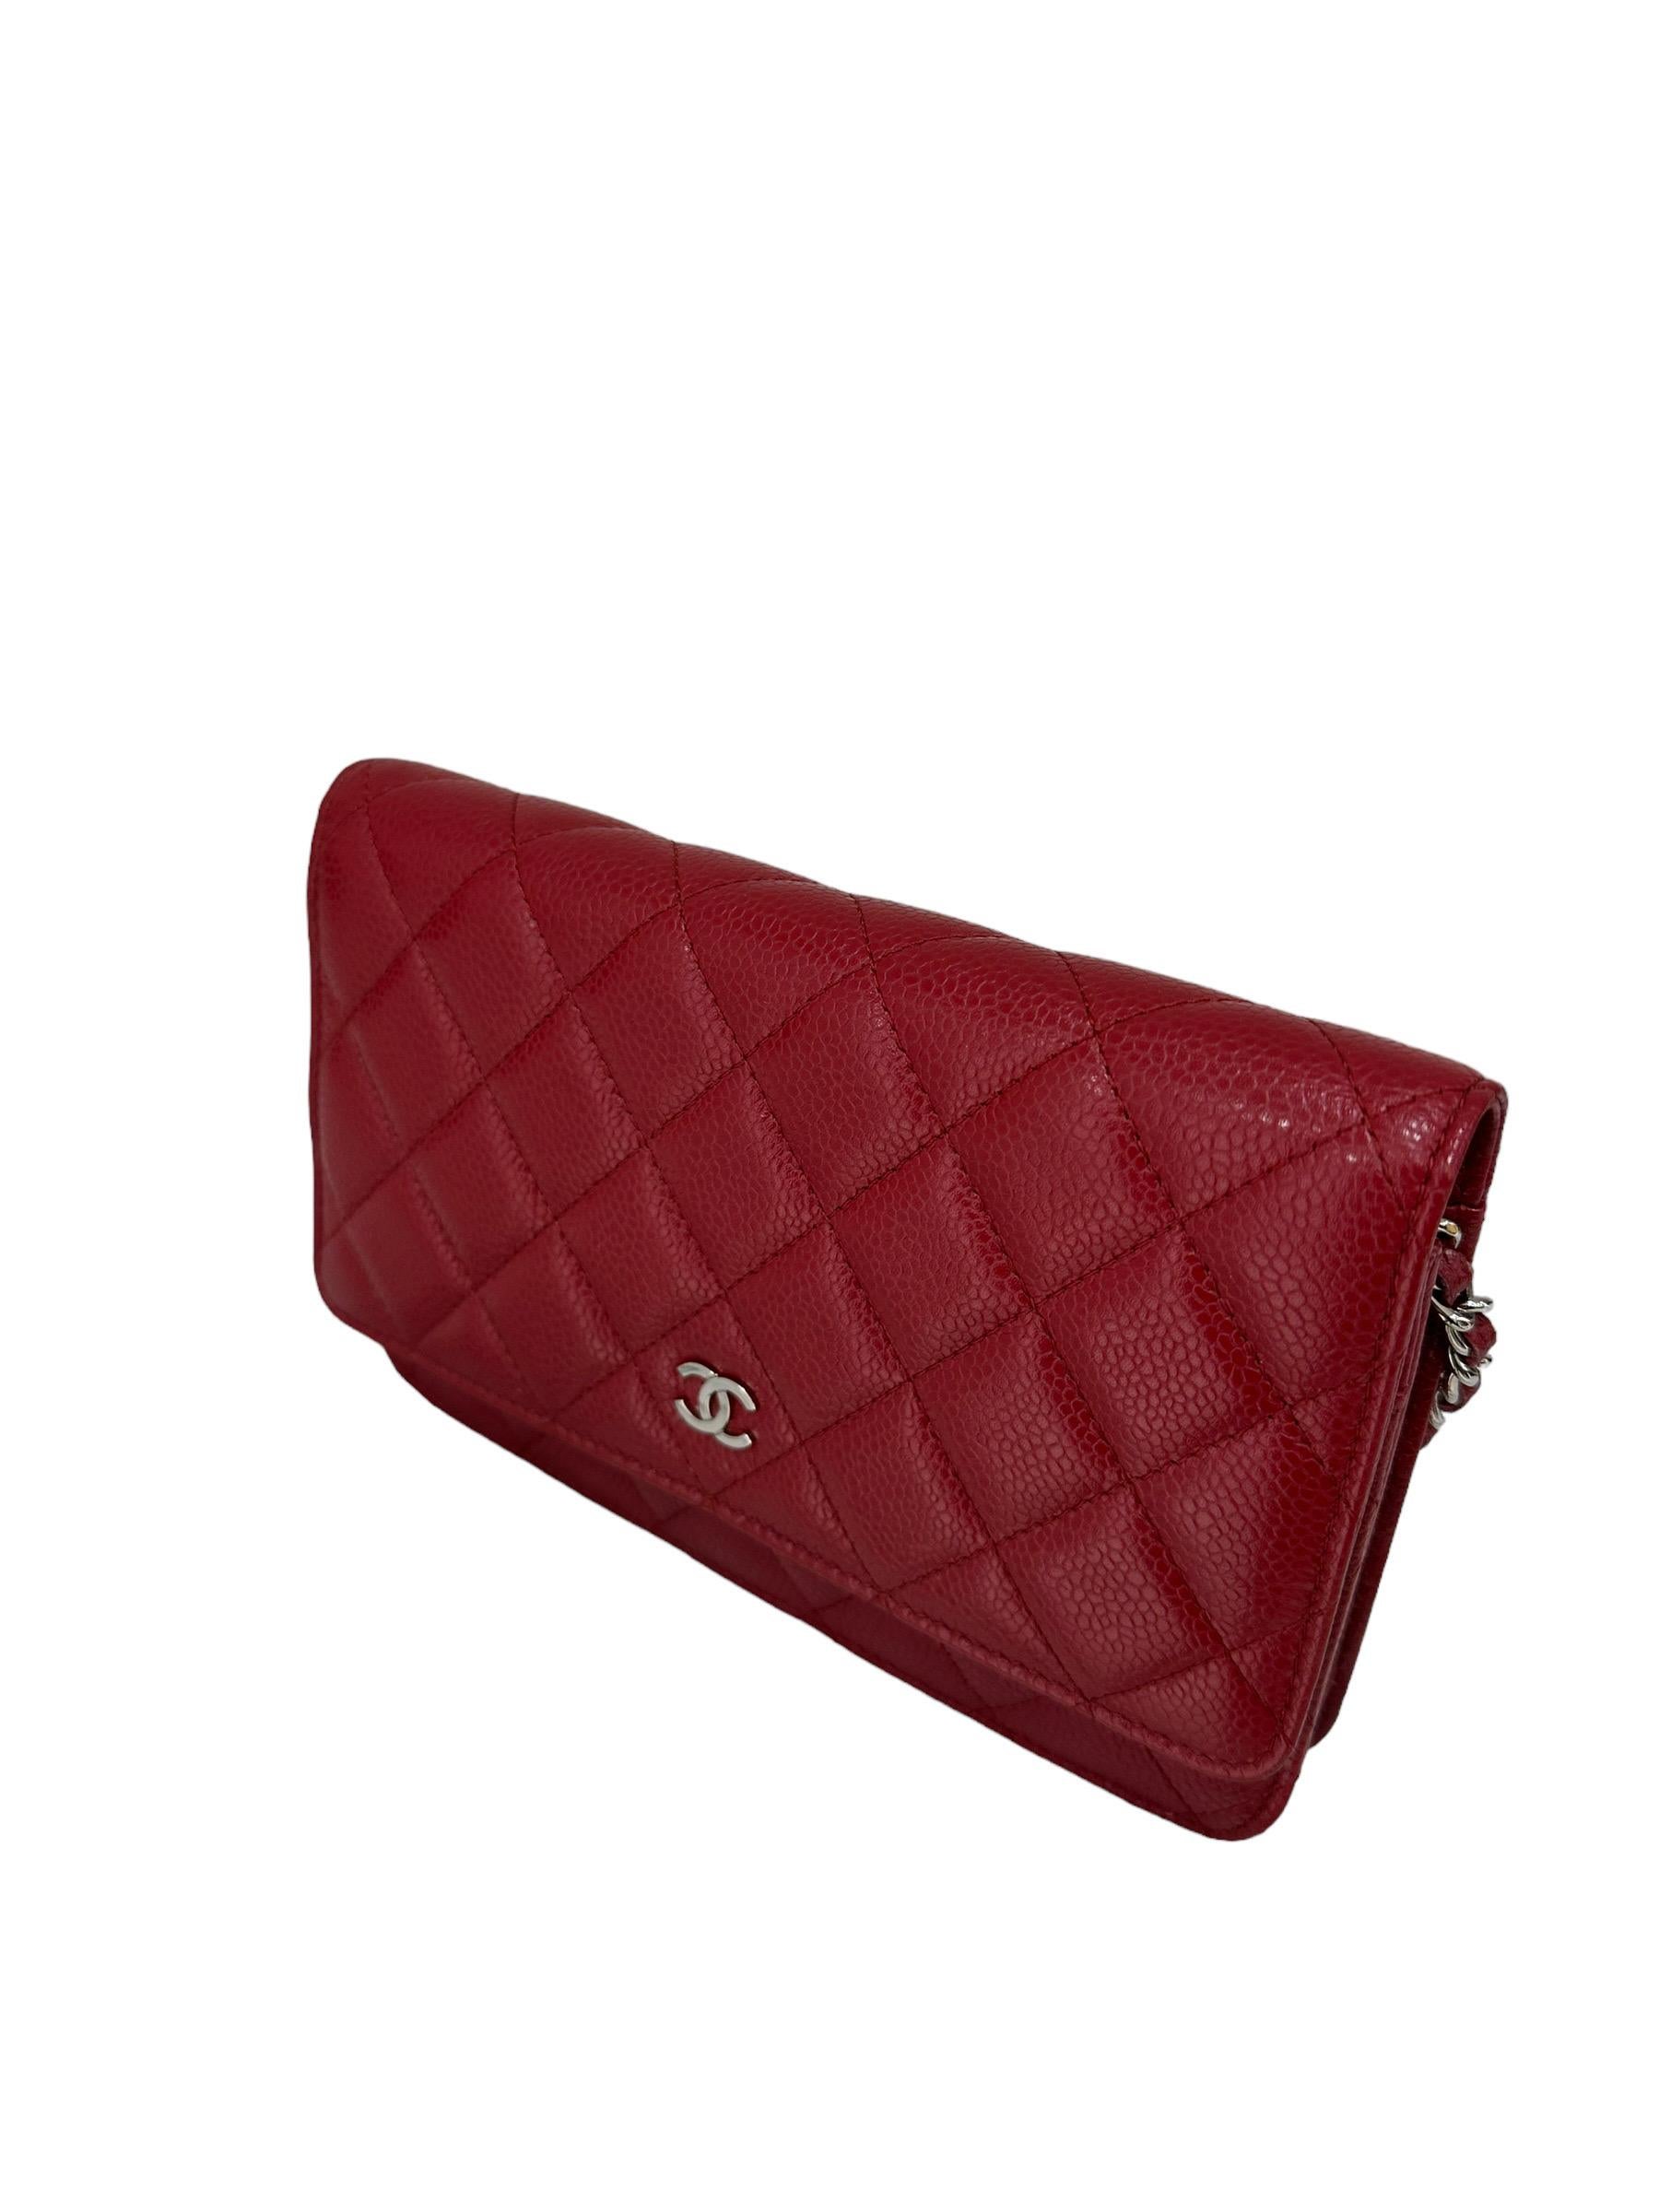 Borsa A Tracolla Chanel Brieftasche an Kette Kaviar Rossa 2014 (Rot) im Angebot